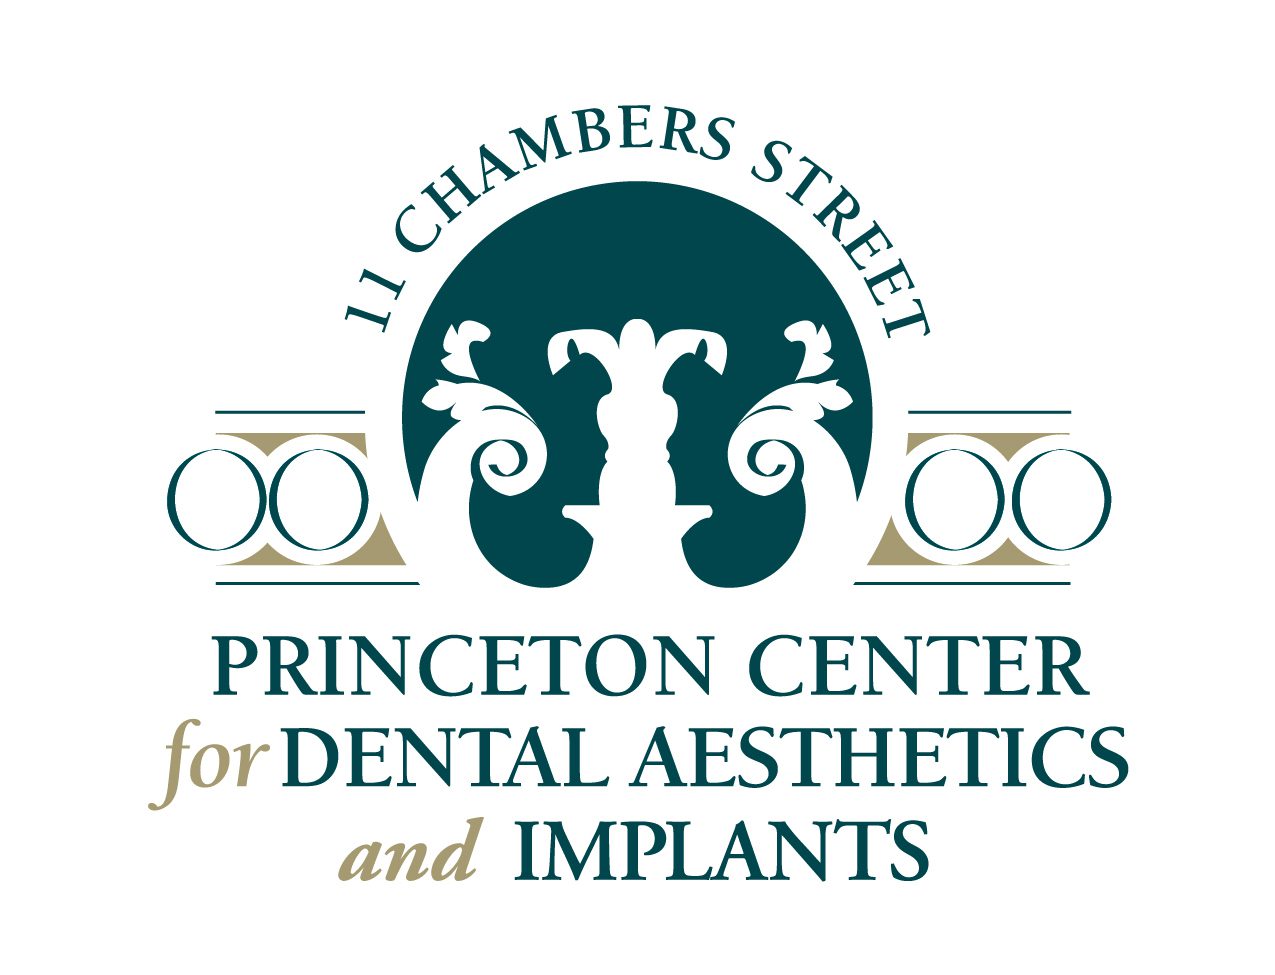 Princeton Center for Dental Aesthetics and Implants logo